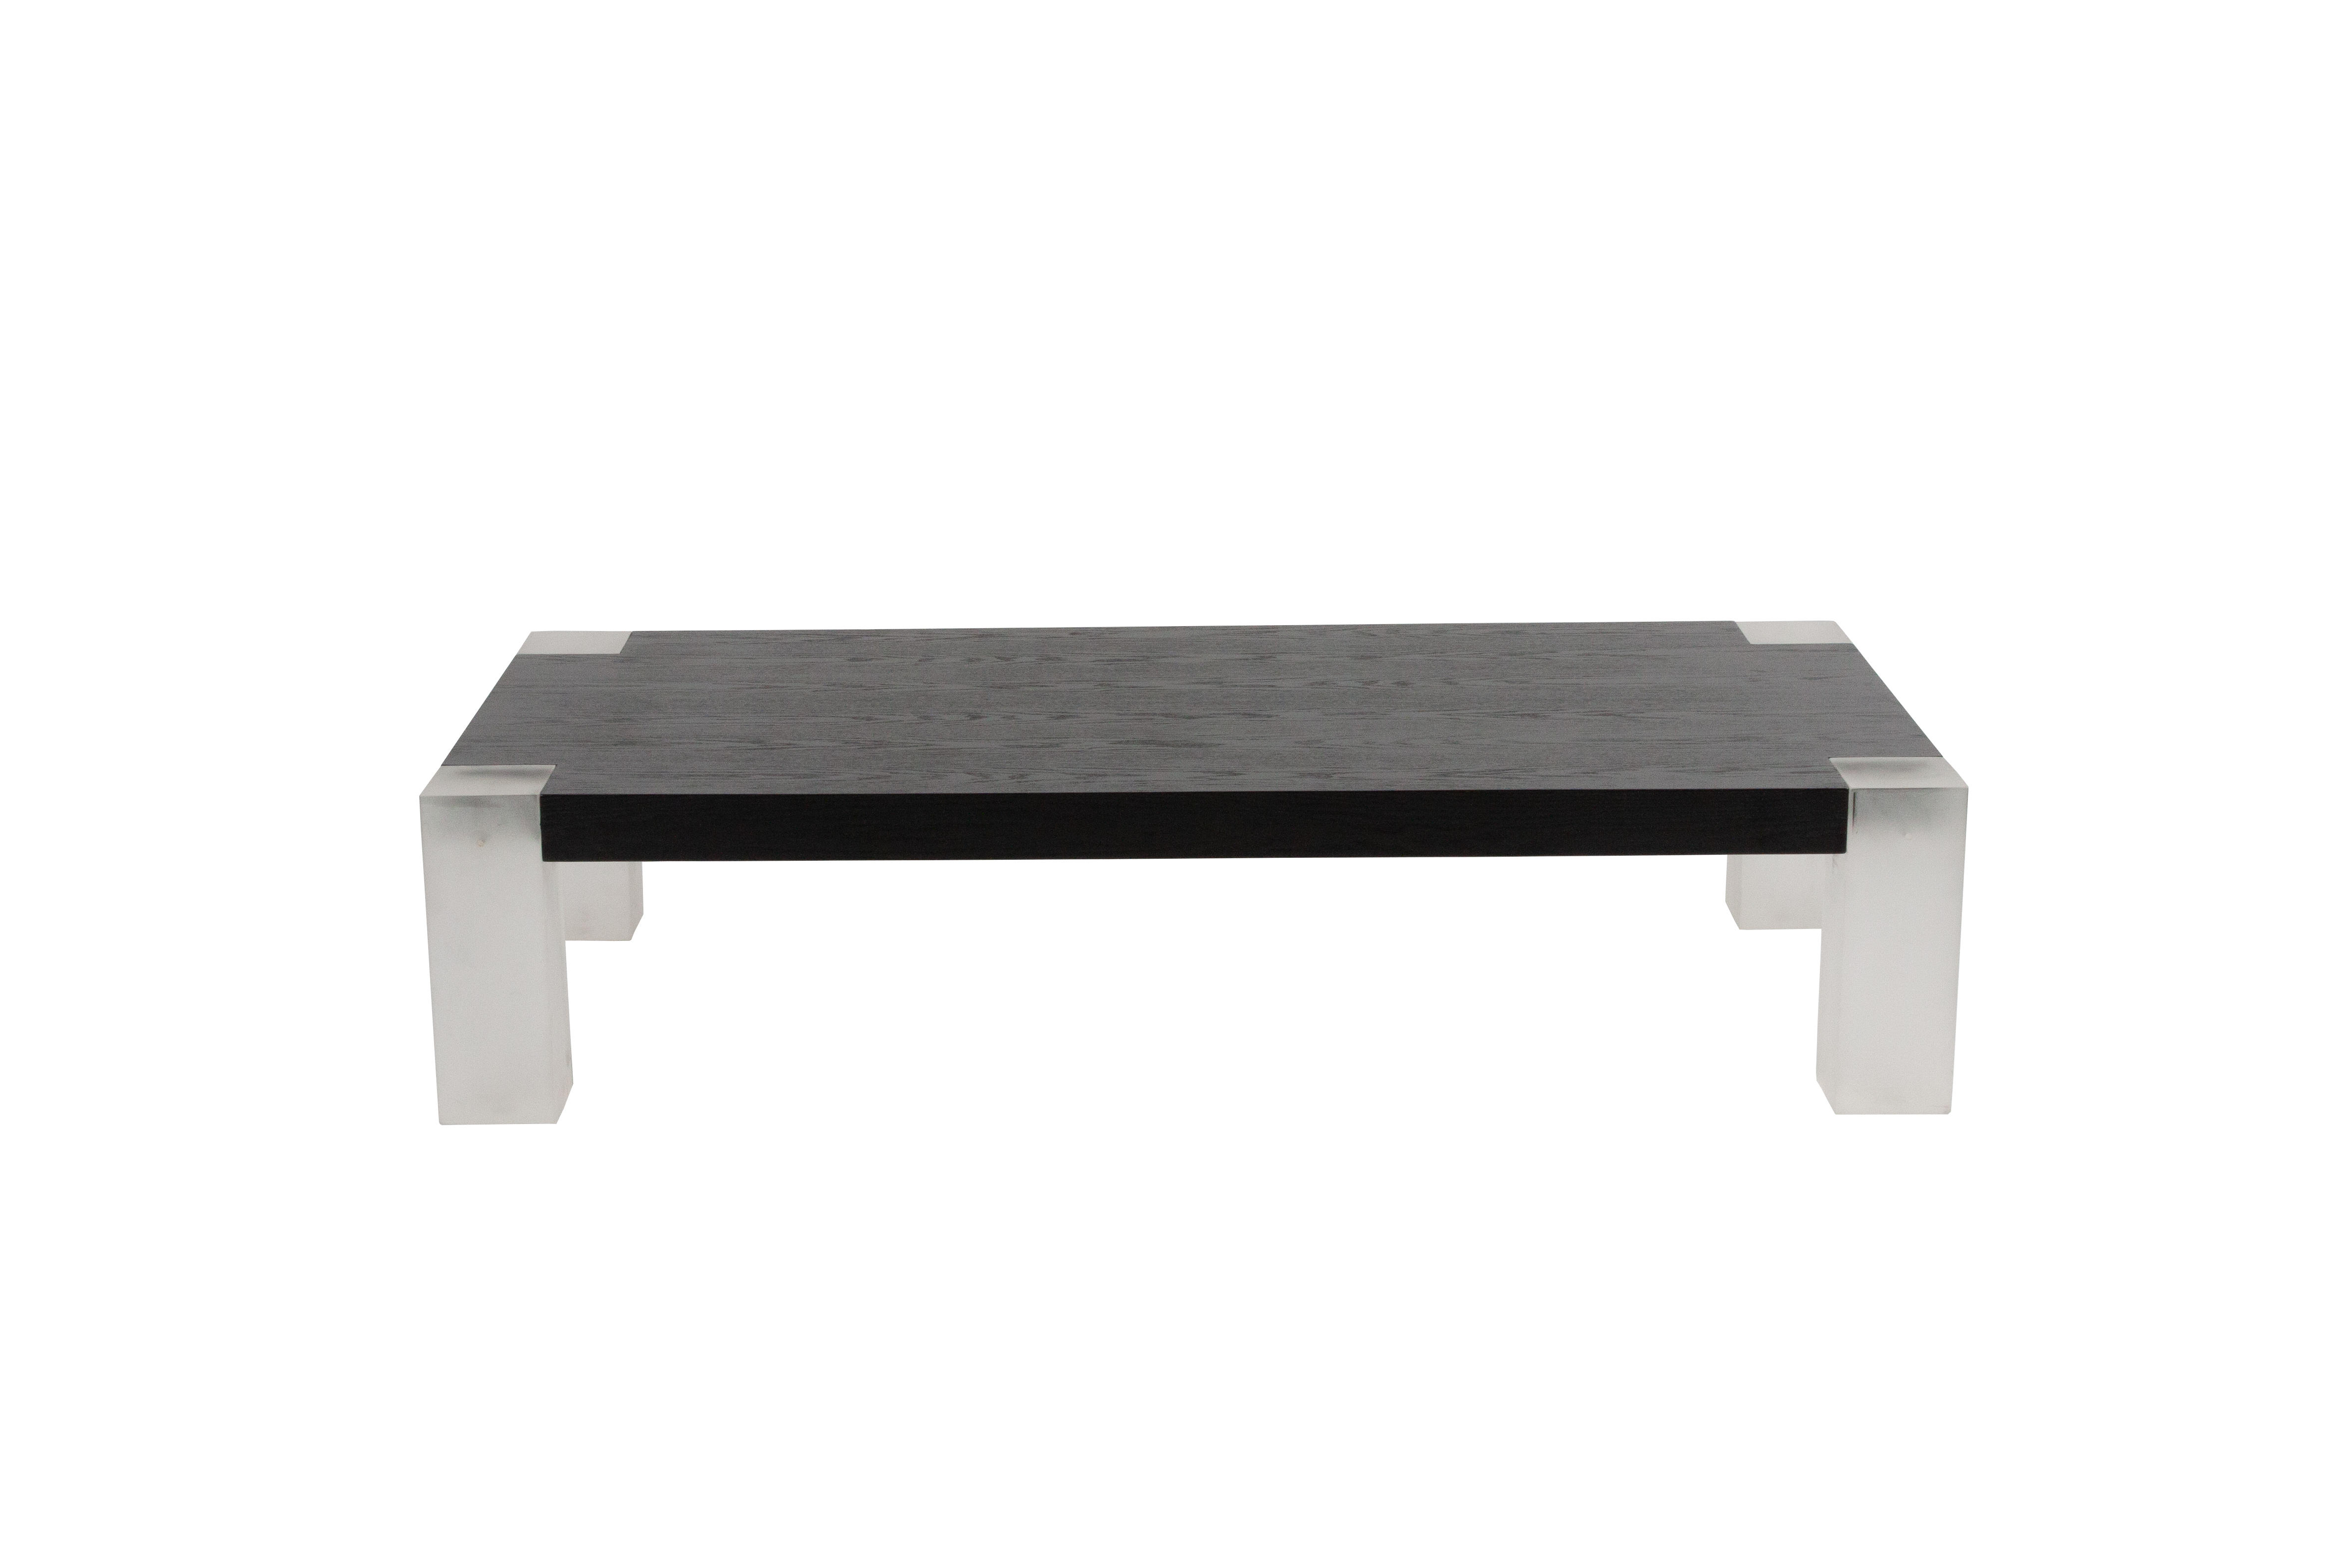 RJT-9706 contemporary acrylic leg oak wood top retangular Coffee table